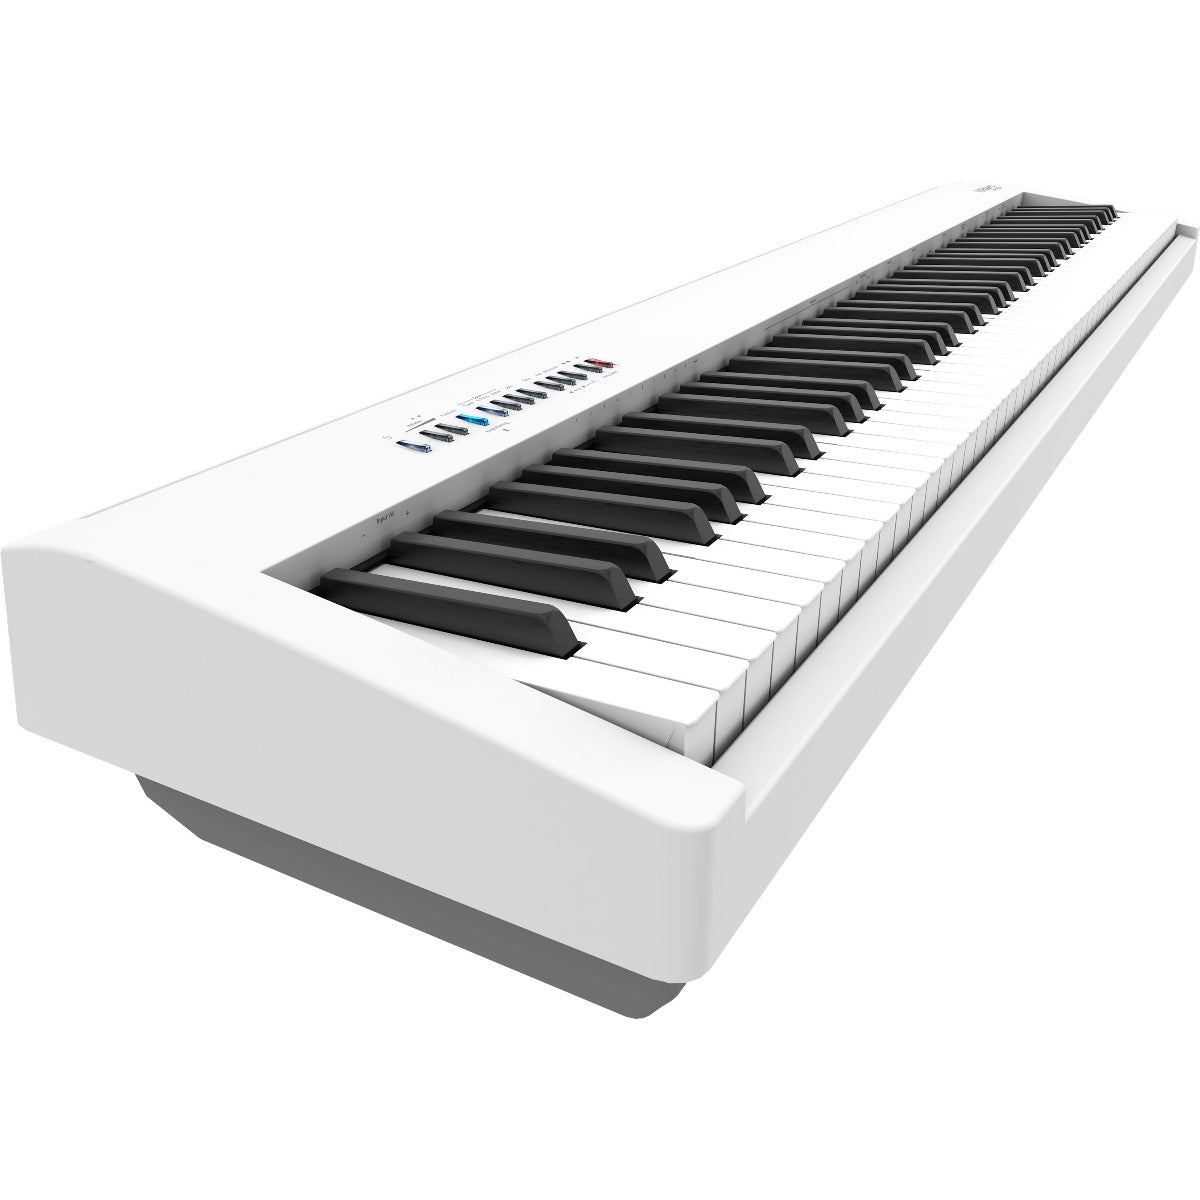 Roland FP-30X Digital Piano (White)